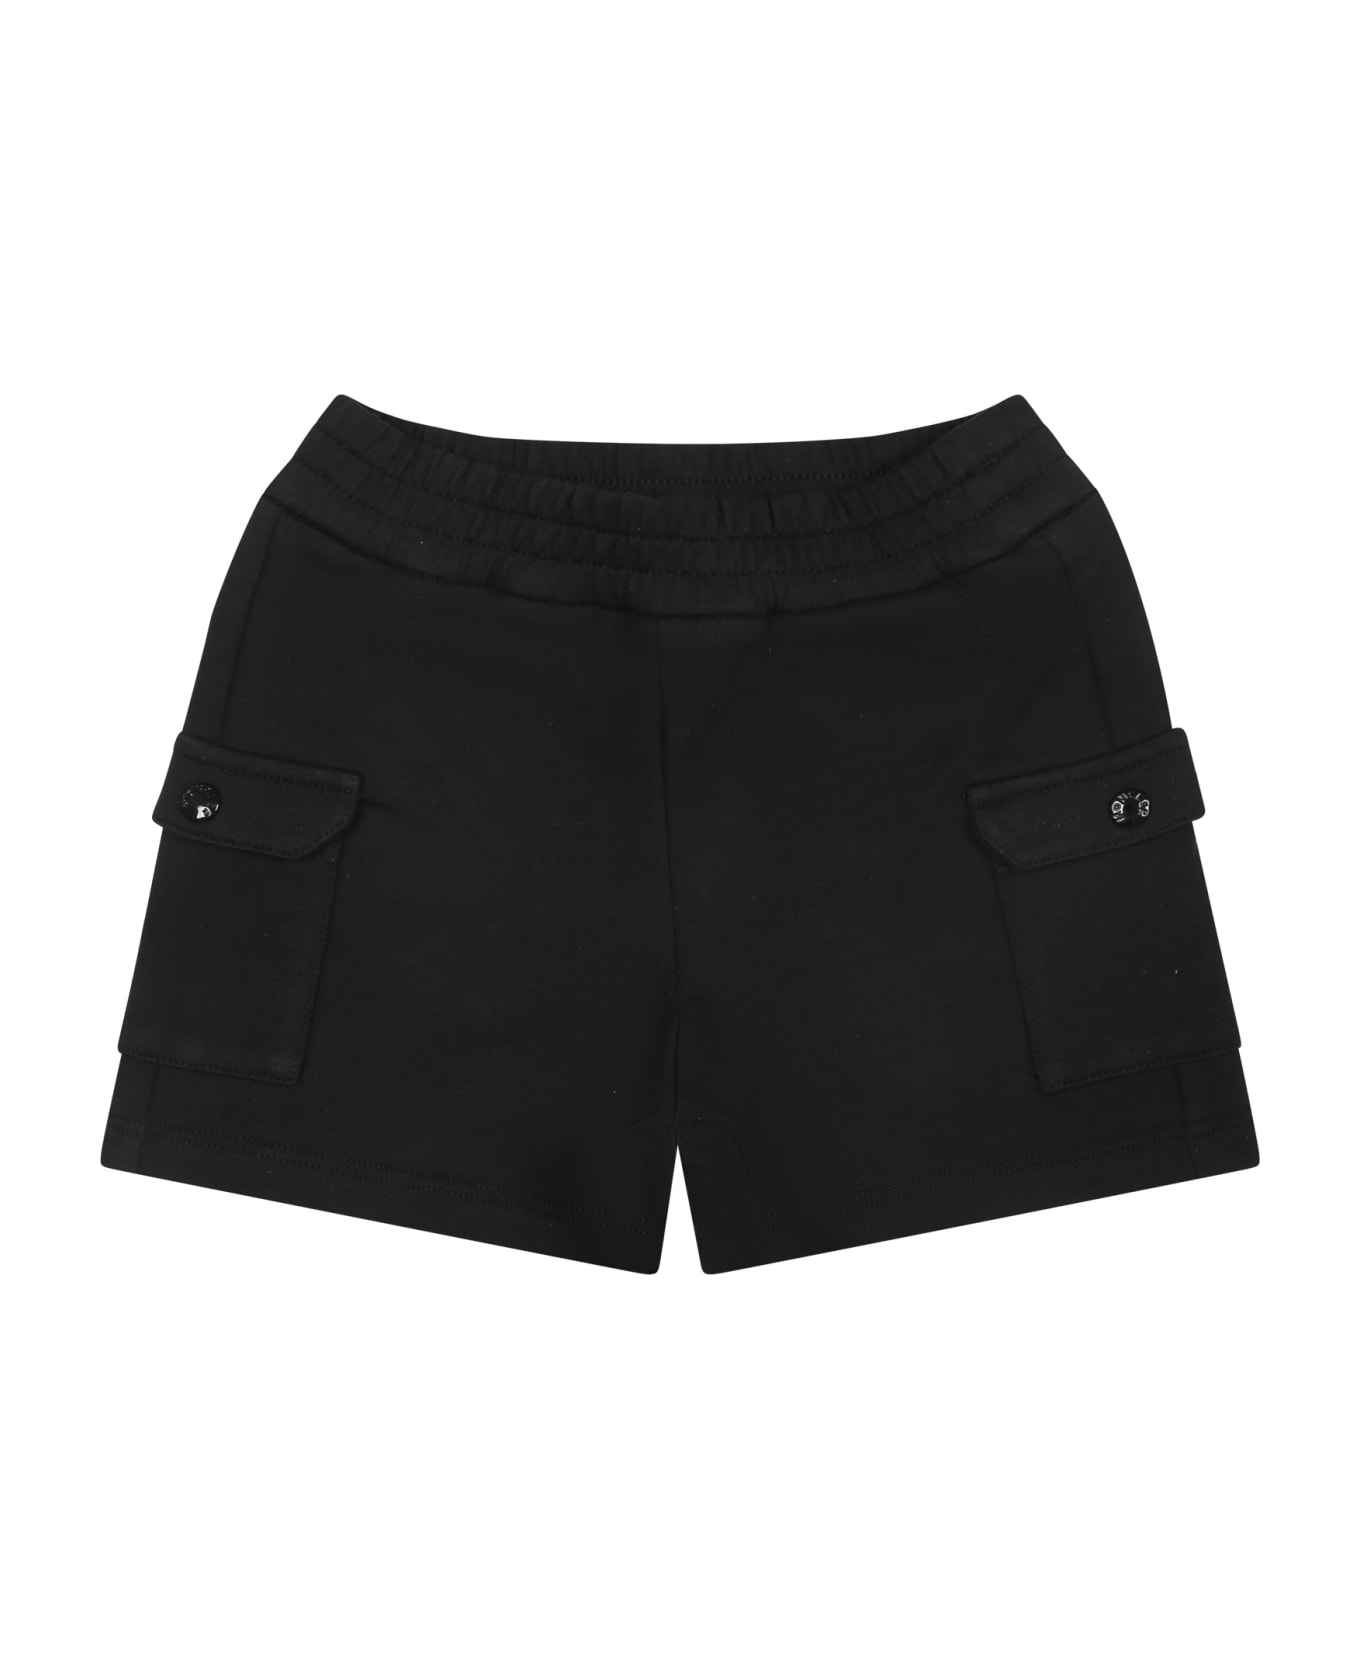 Moncler Black Sports Shorts For Baby Boy - Black